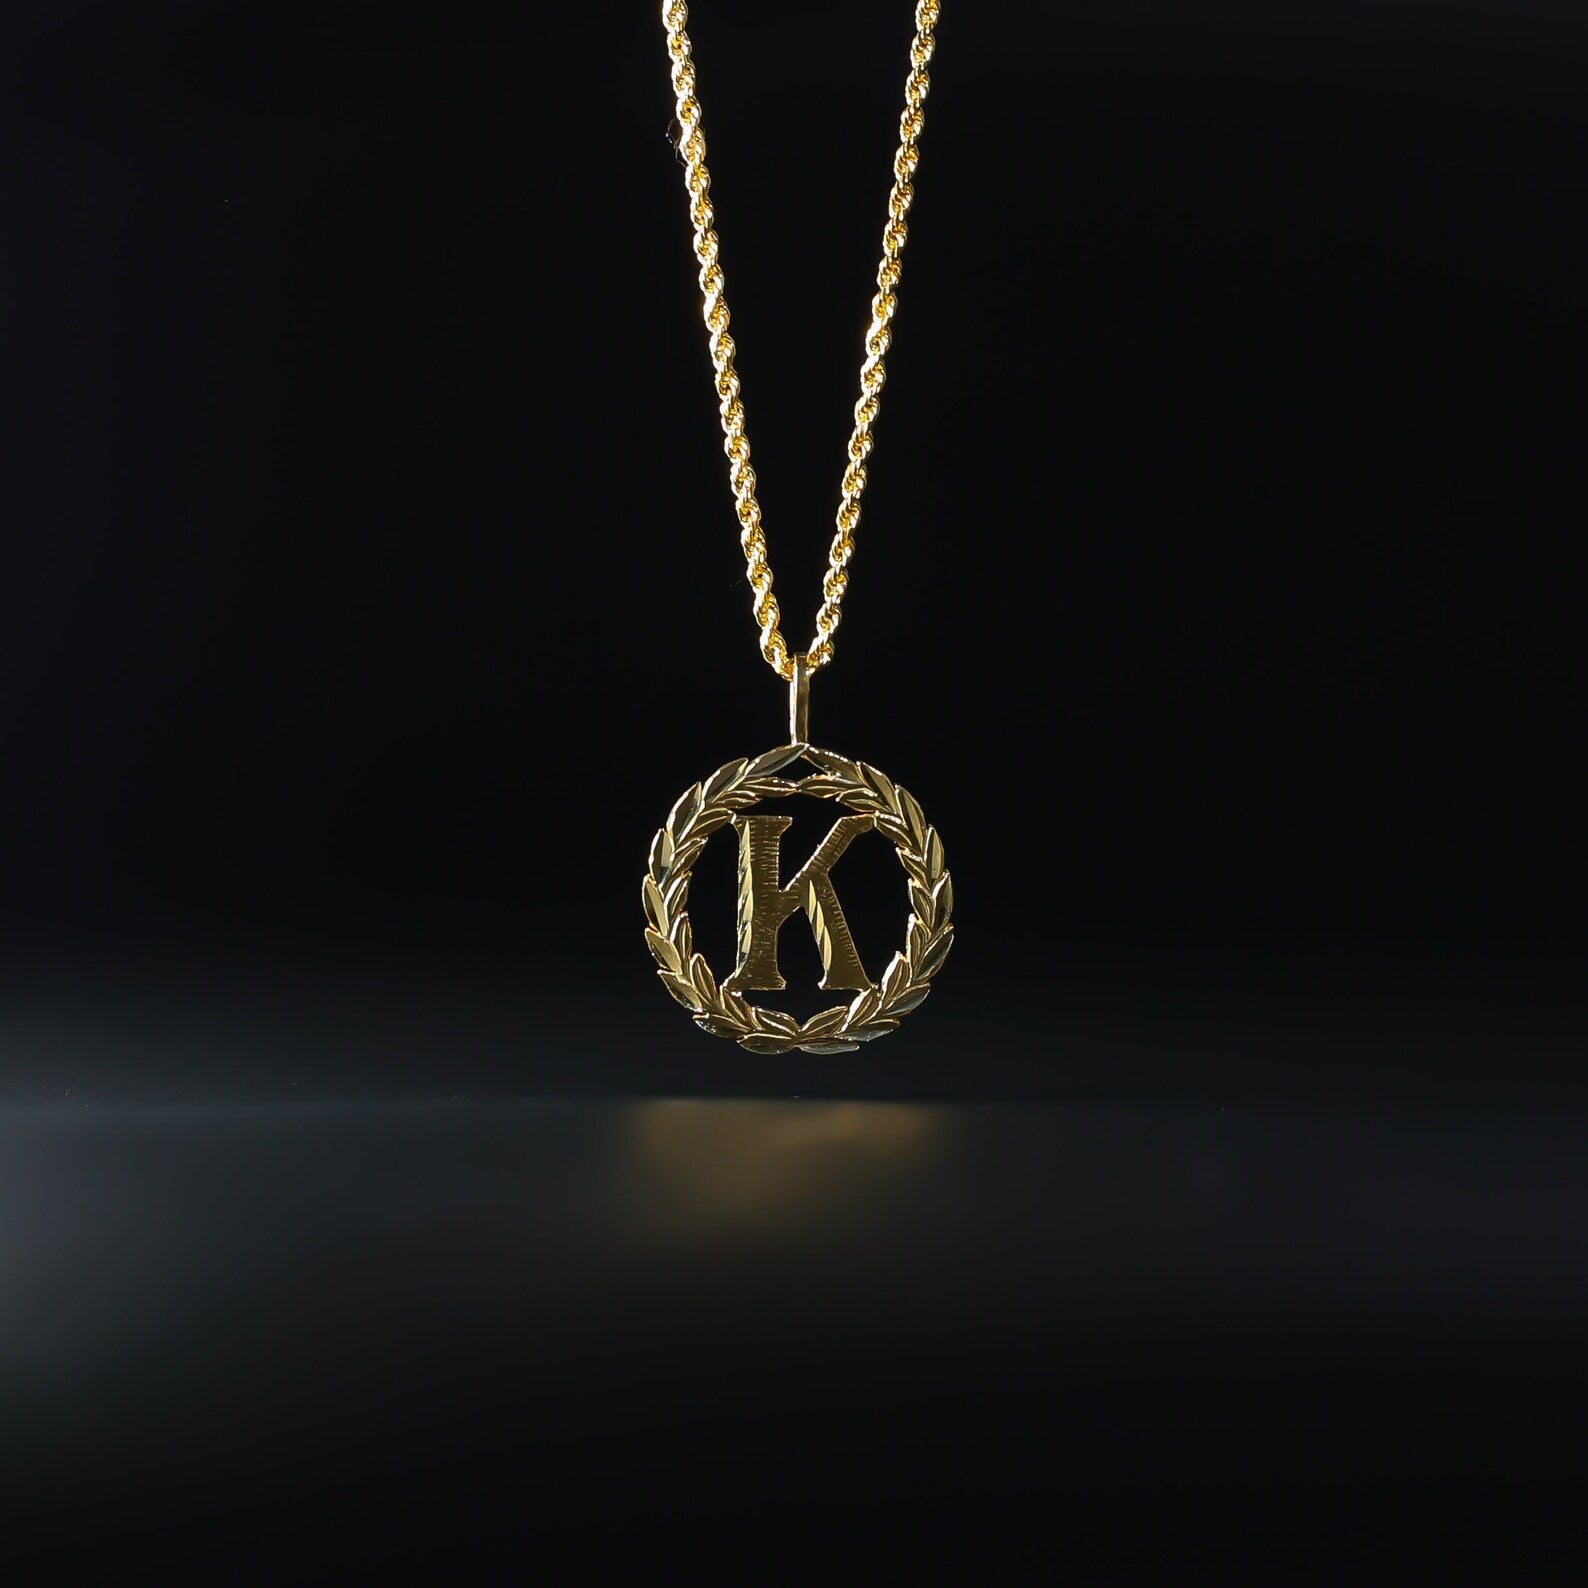 Gold Wreath K Initial Pendant | A-Z Pendants - Charlie & Co. Jewelry